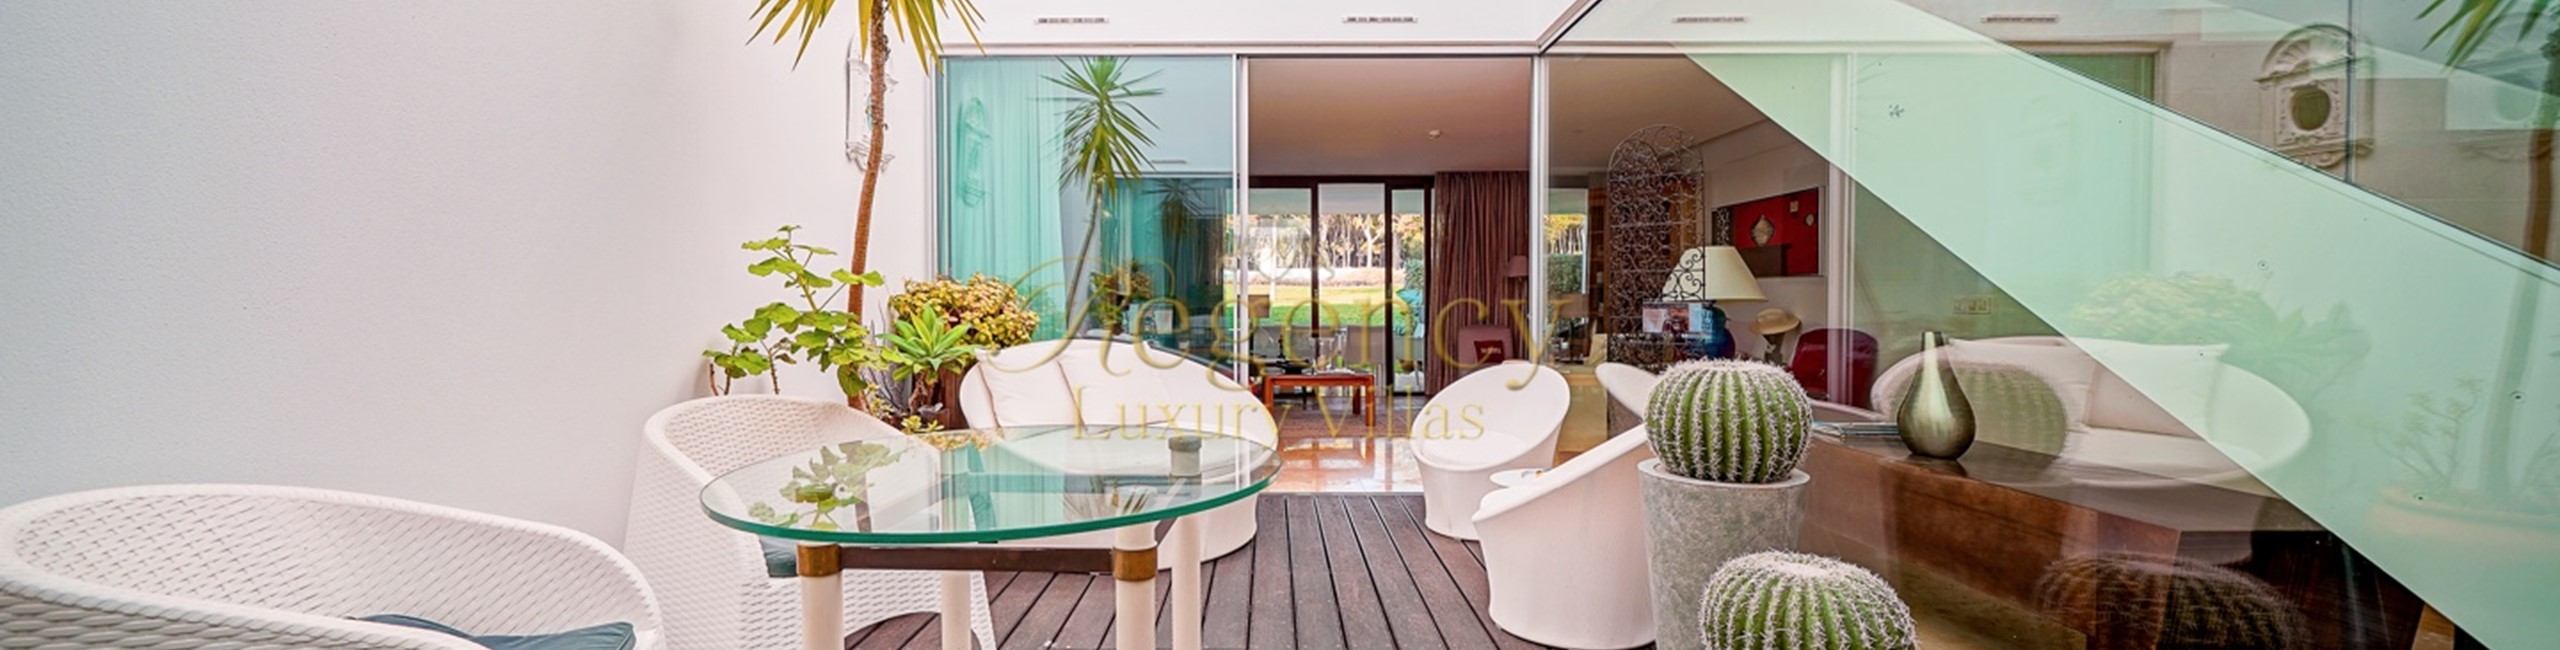 3 Bedroom Villa To Rent Near Vilamoura Algarve Portugal